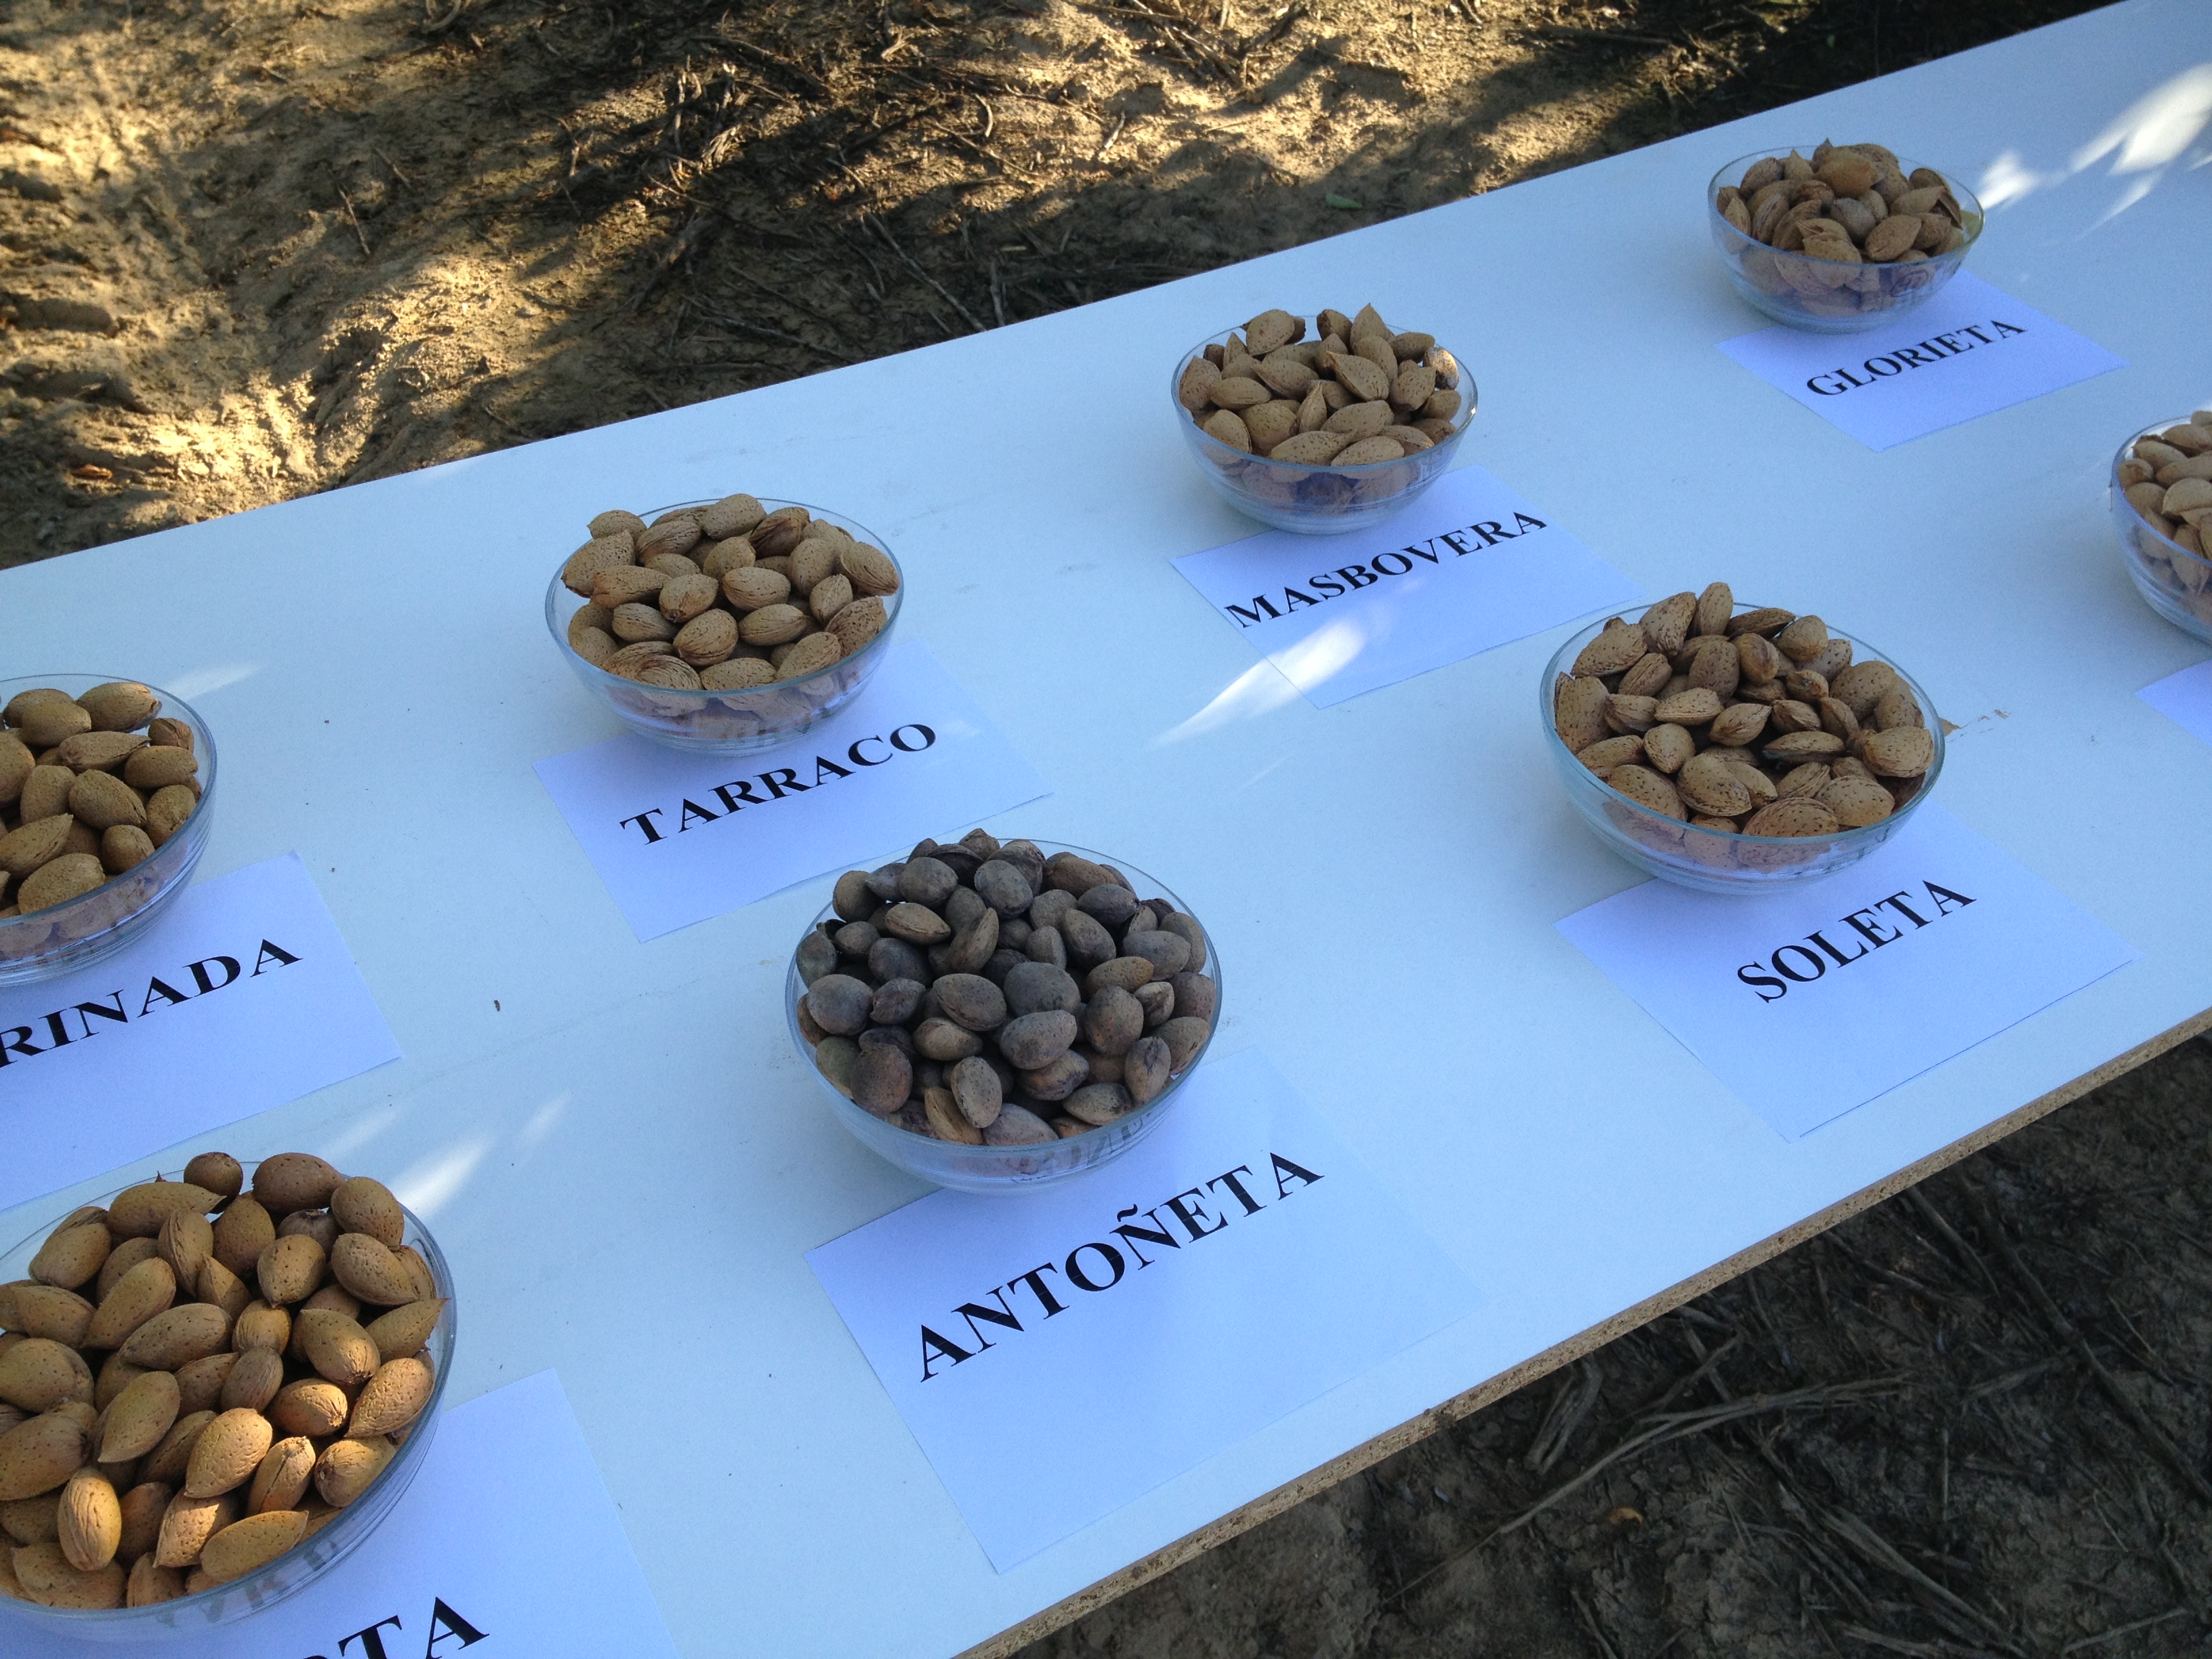 Types of almonds according to varieties